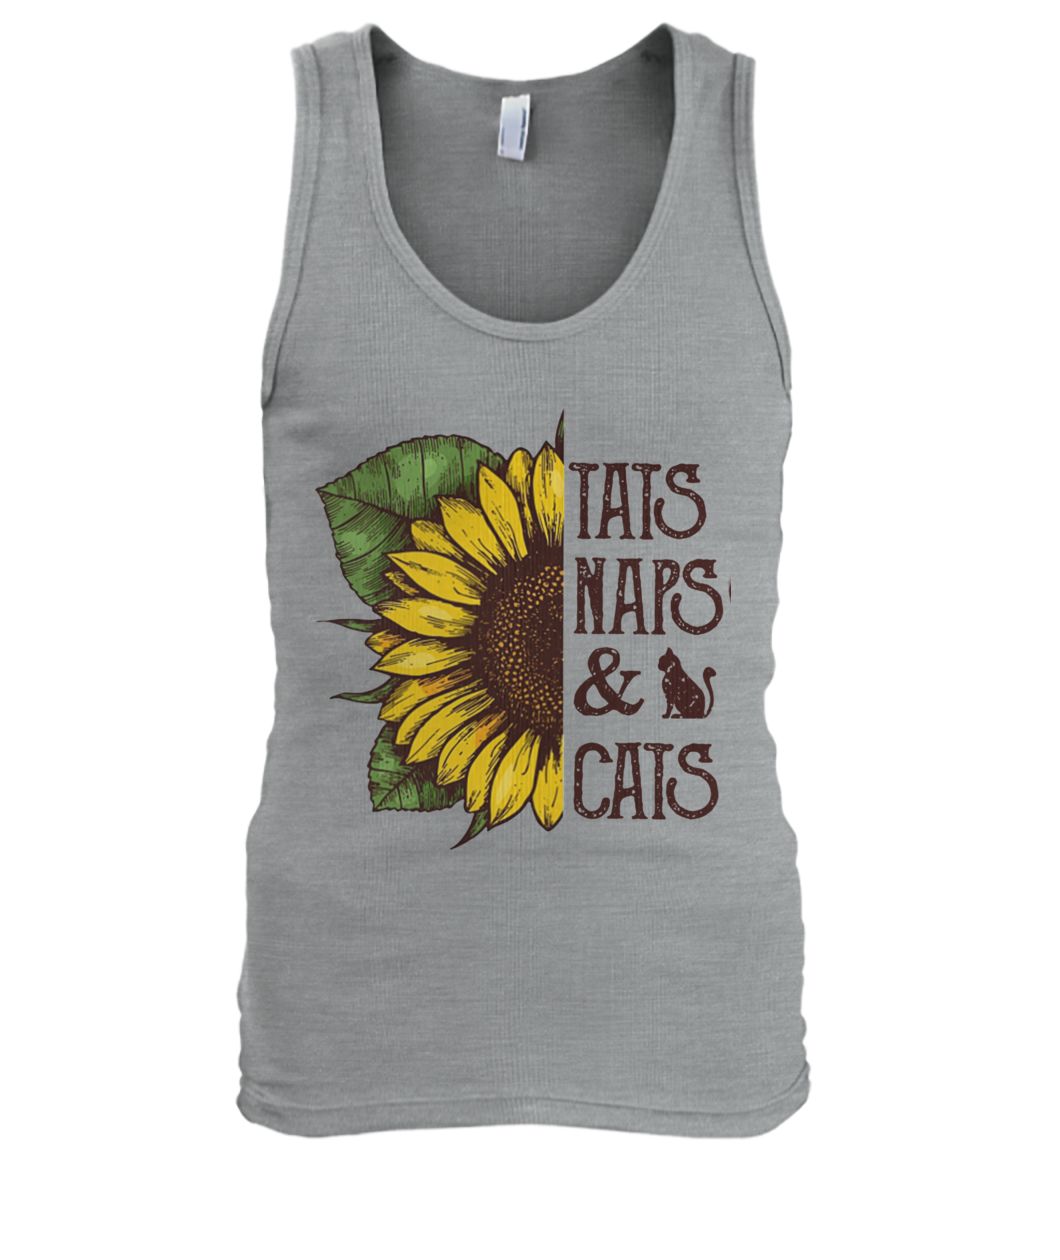 Sunflower tats naps and cats men's tank top